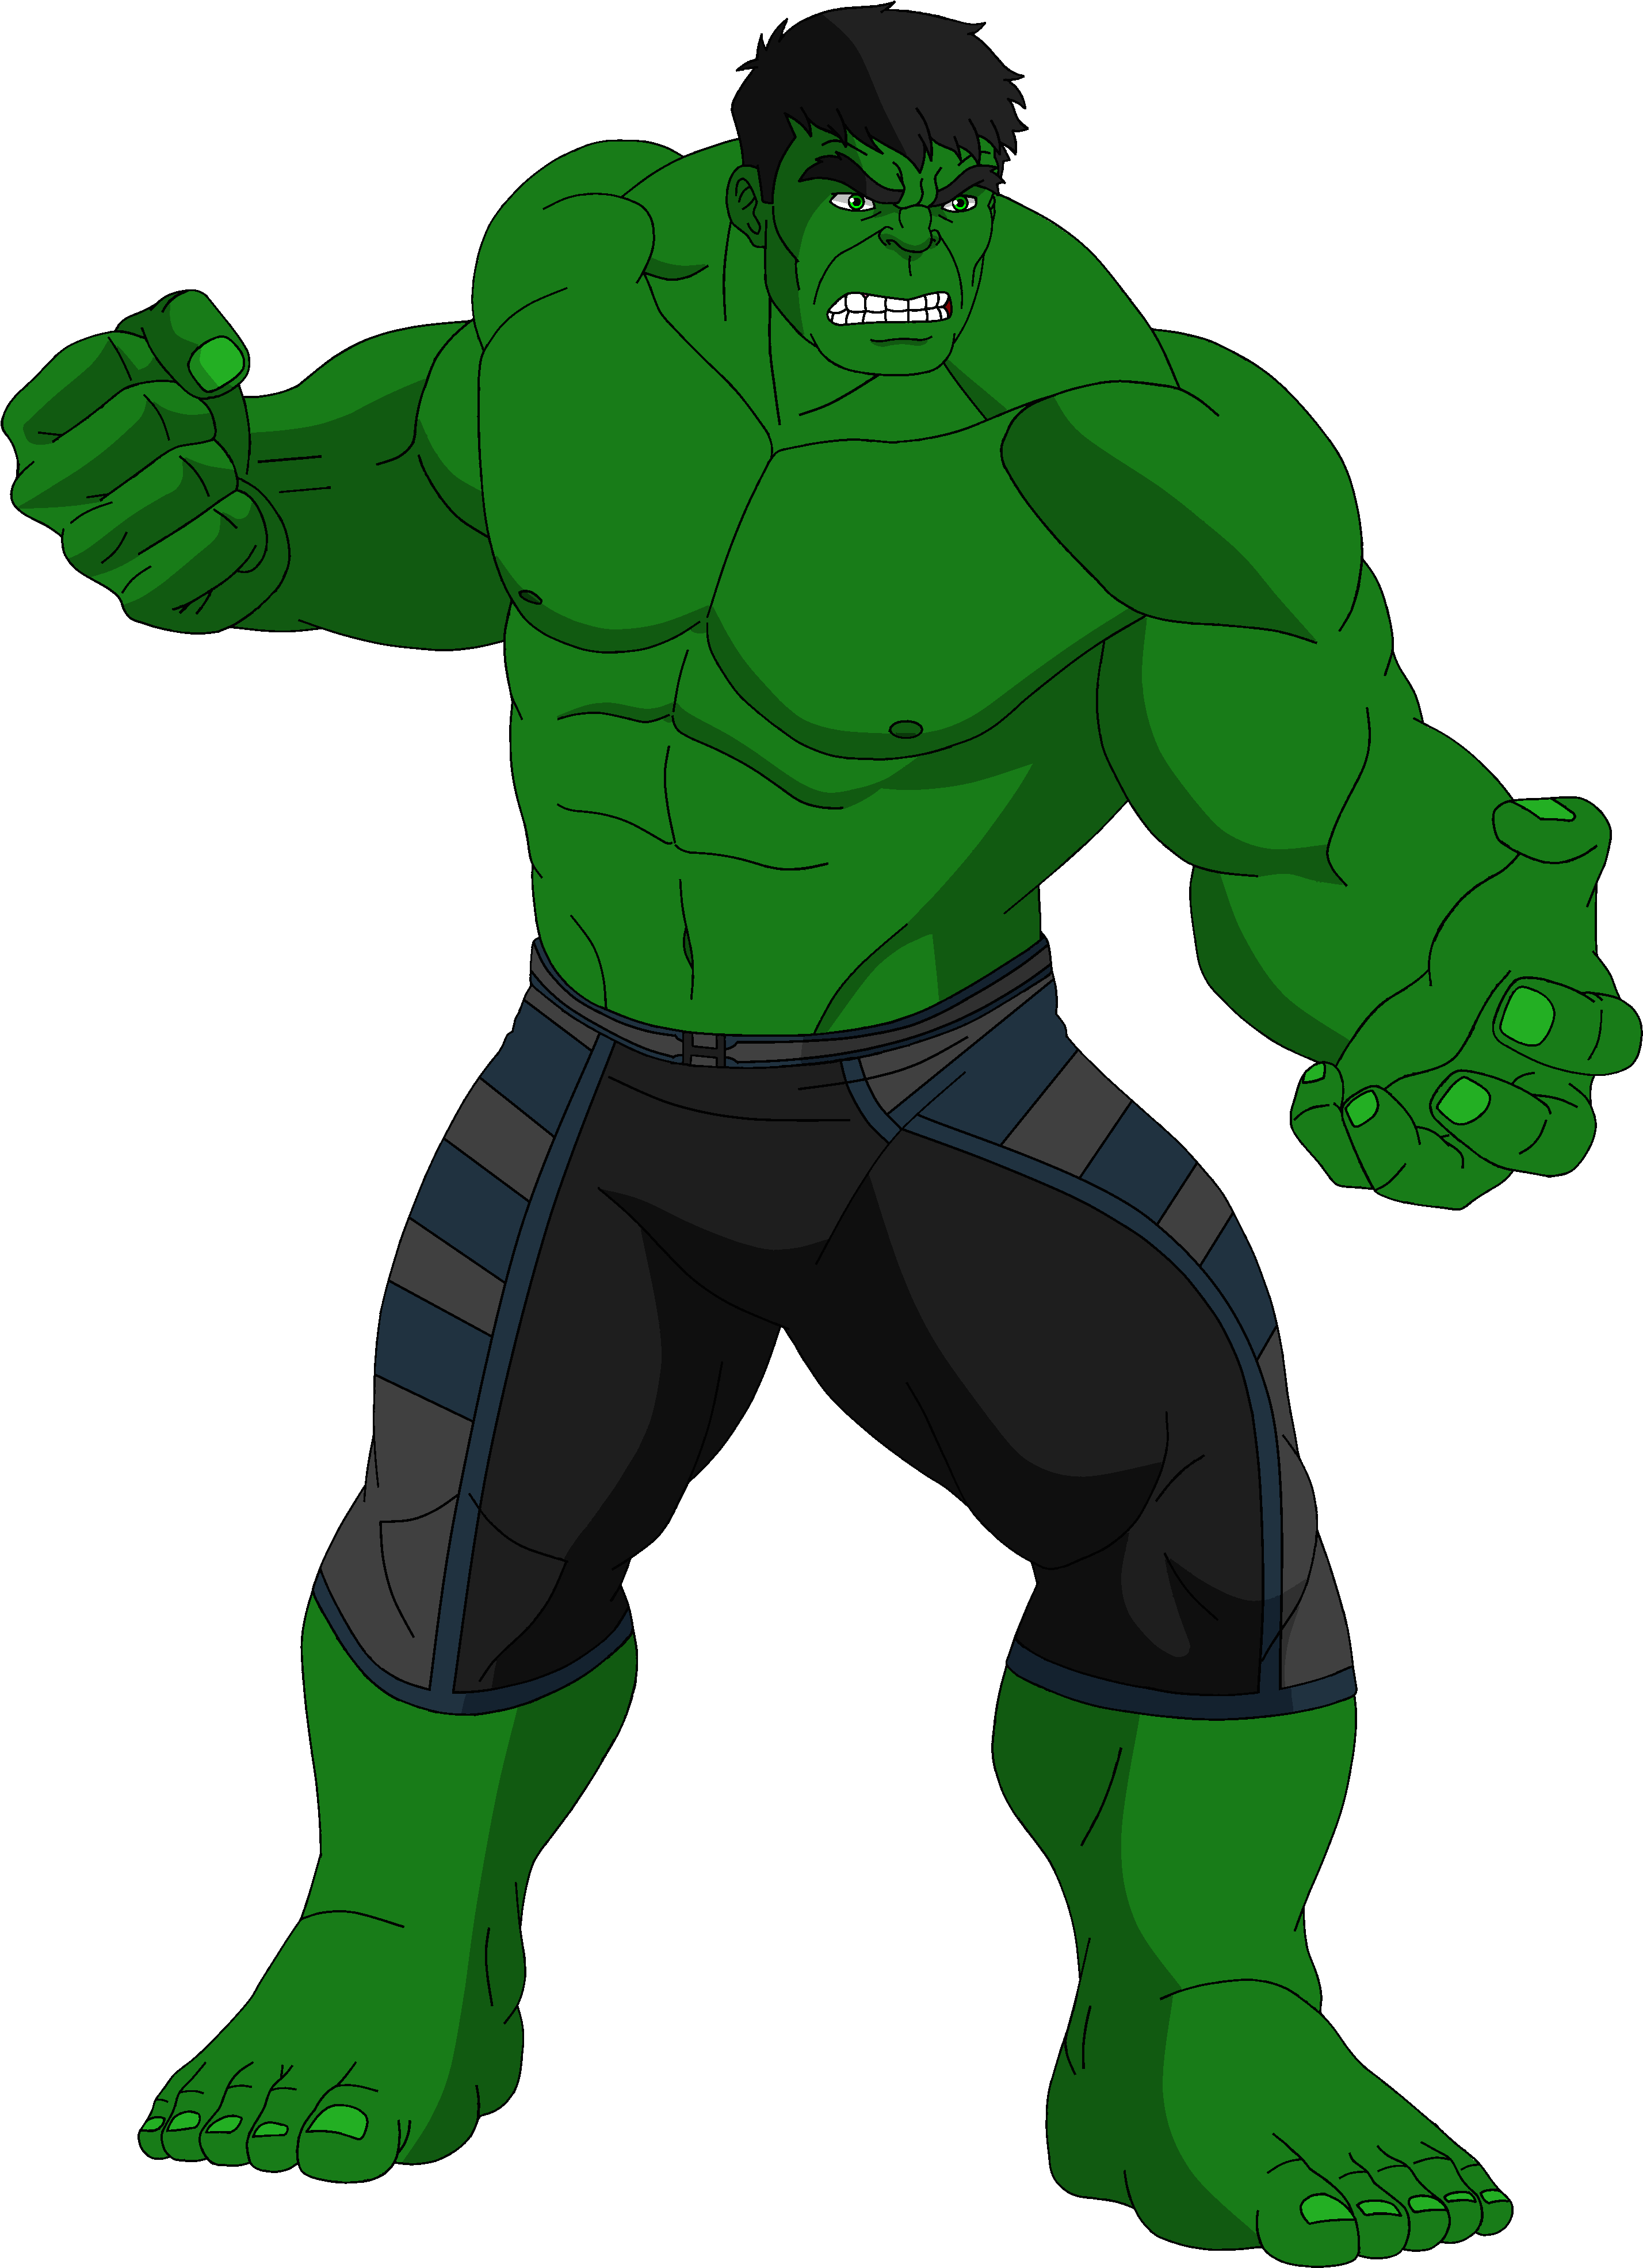 Incredible Hulk By Steeven7620 - Cartoon Image Incredible Hulk (806x1133)